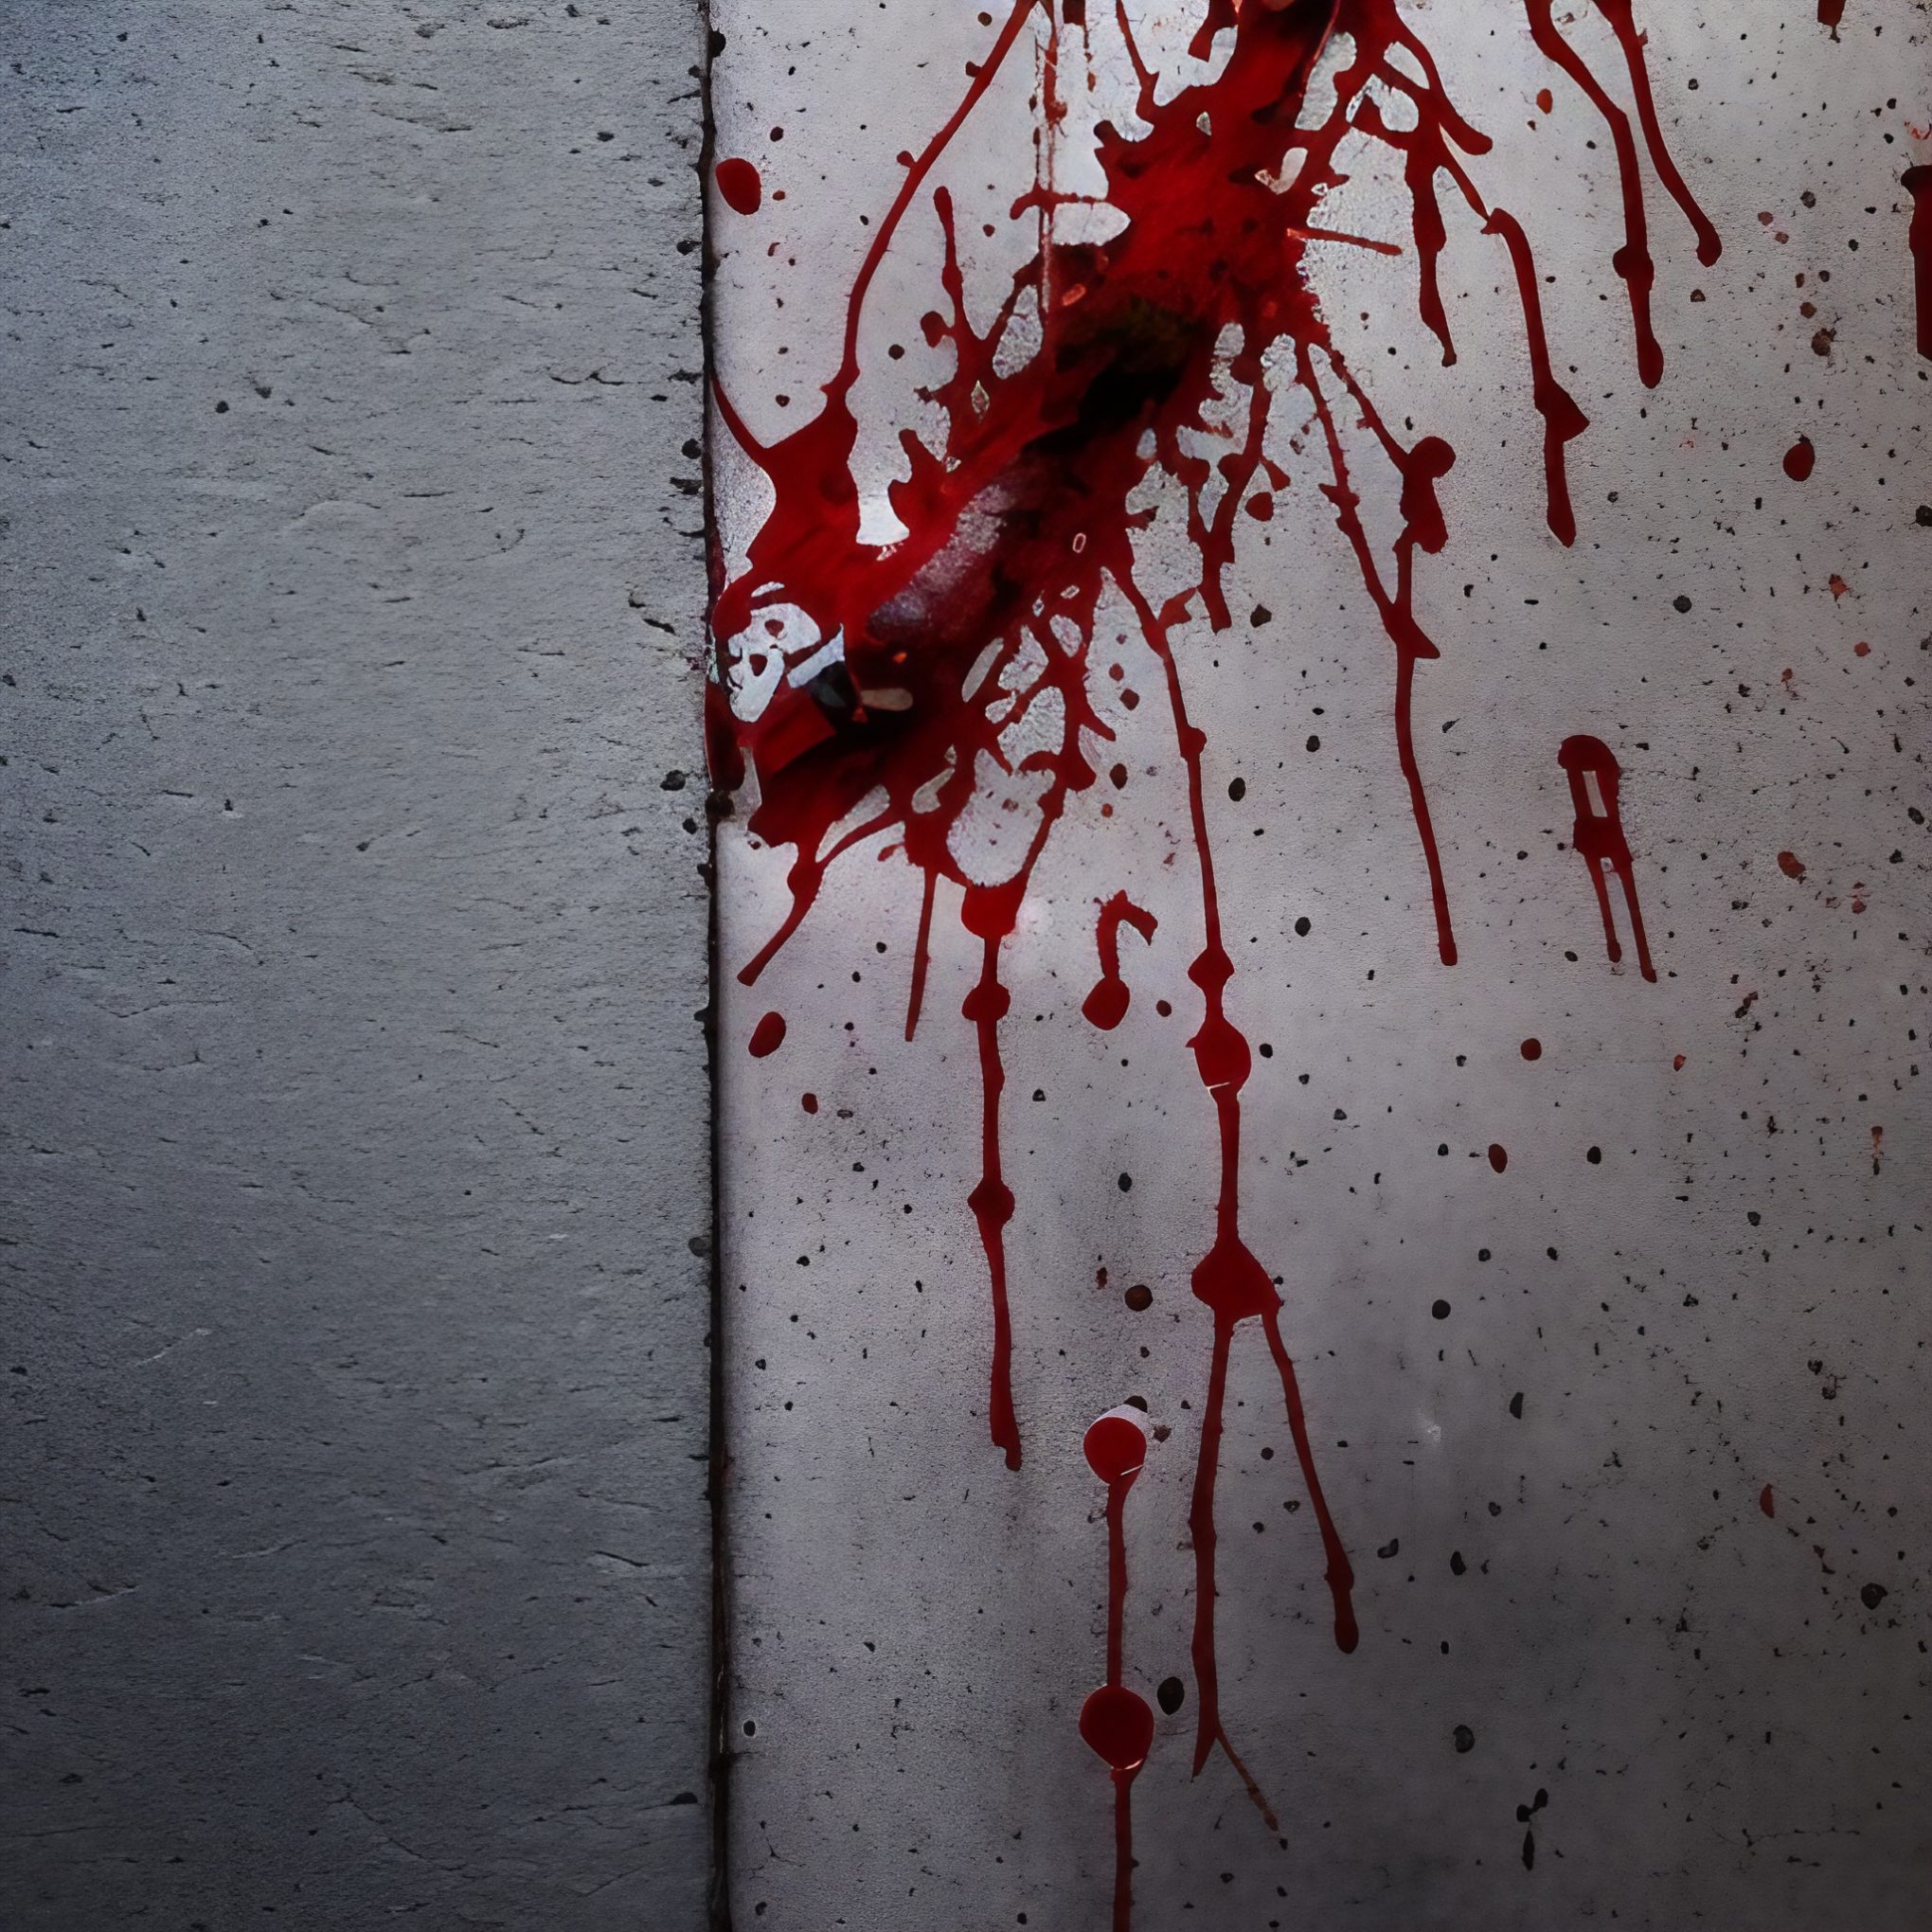 Blood Splatter Gore Horror Free Stock Image Download